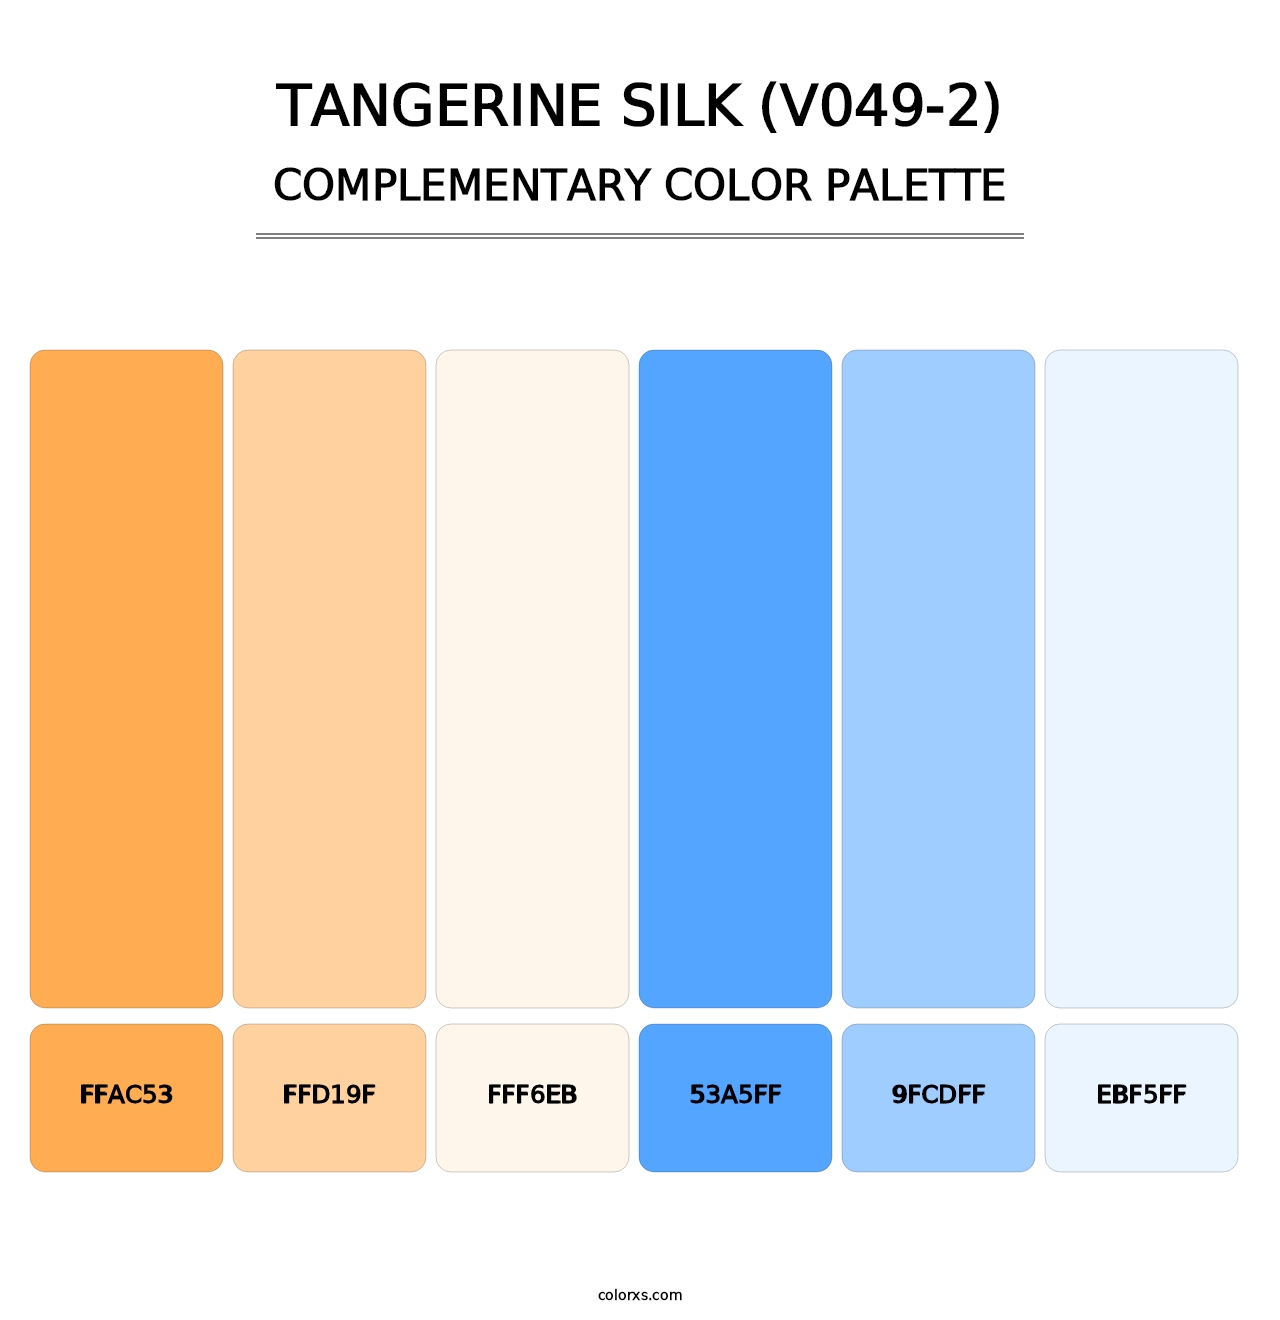 Tangerine Silk (V049-2) - Complementary Color Palette